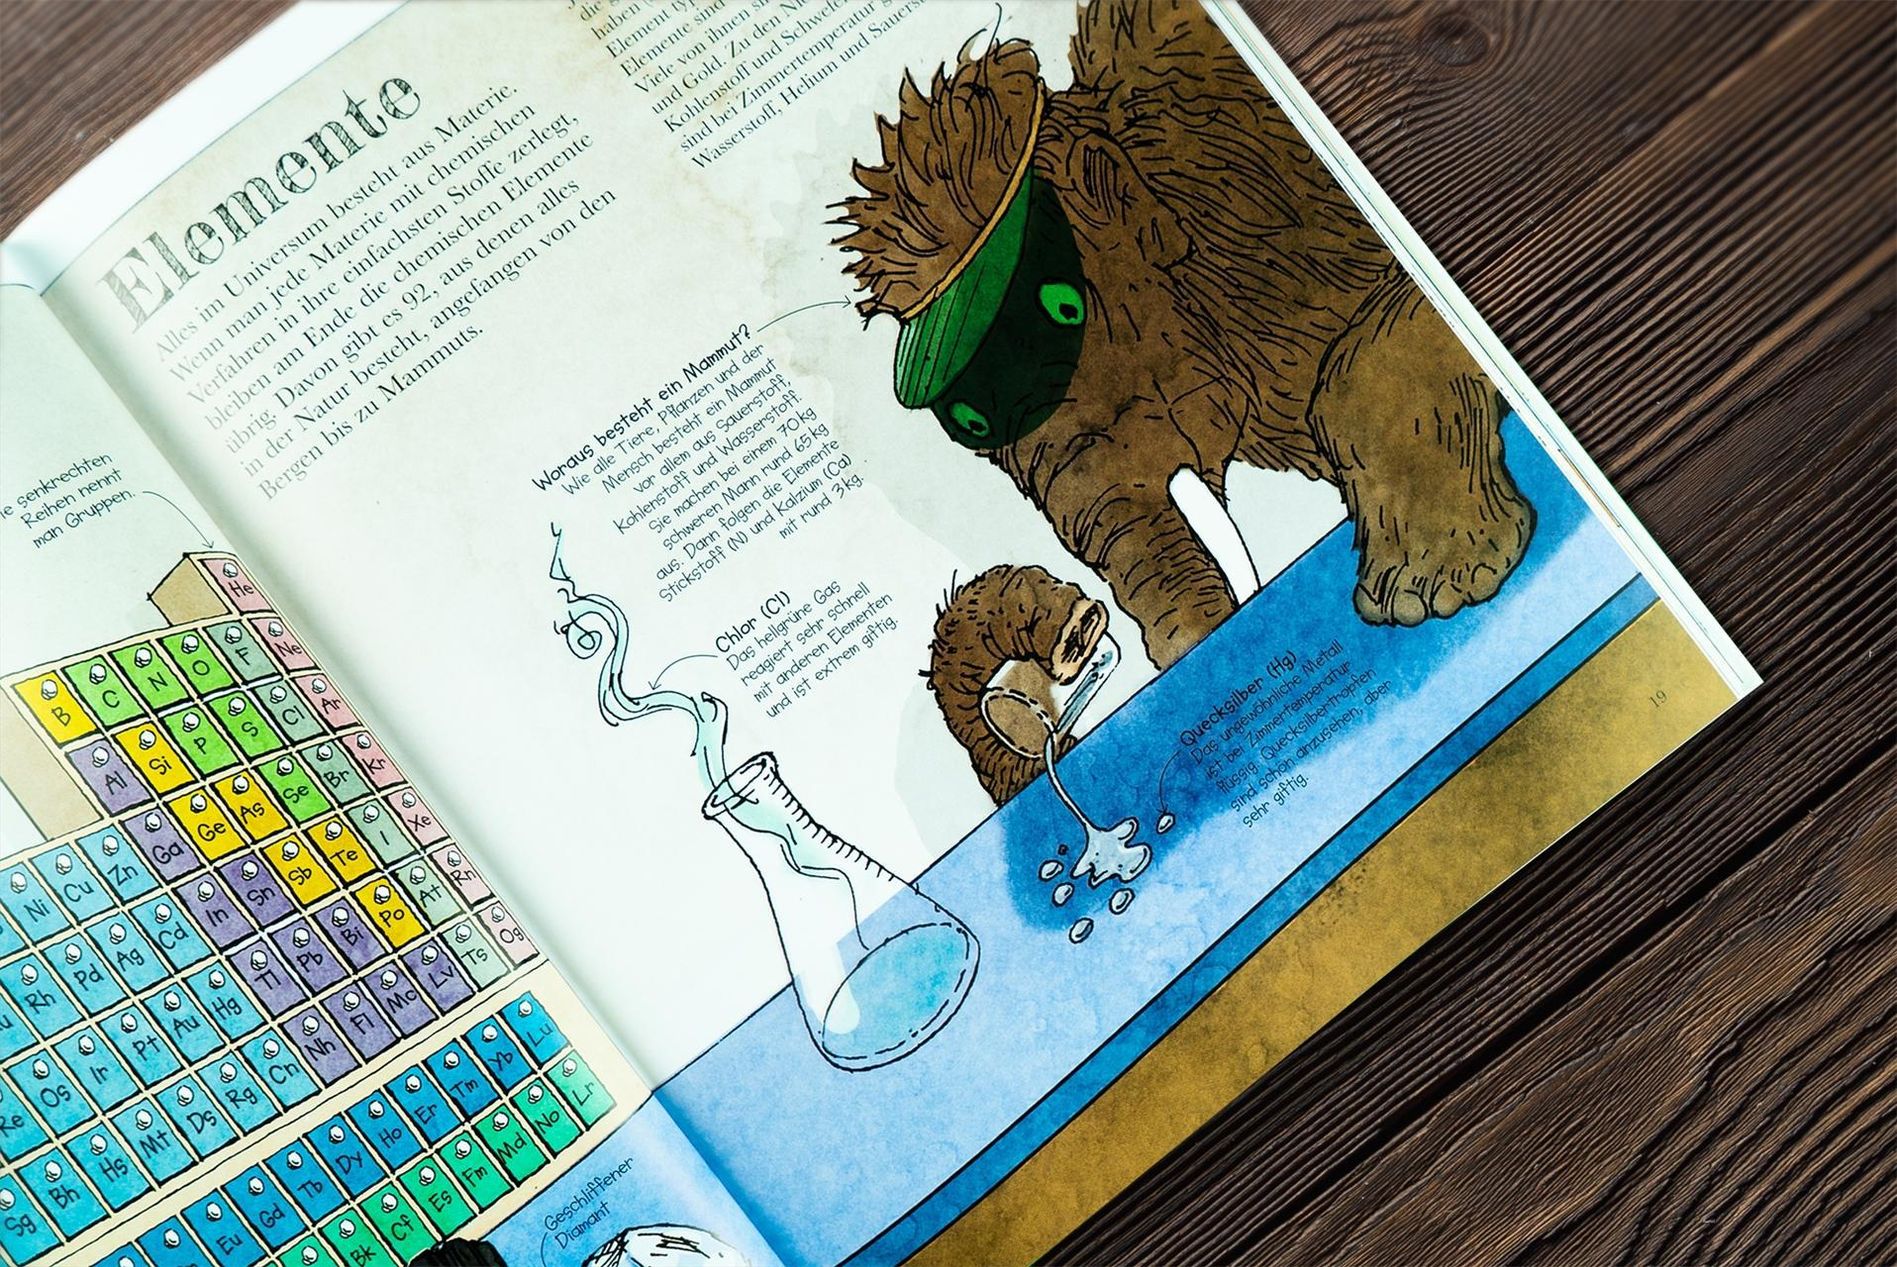 Das Mammut-Buch Naturwissenschaften Buch versandkostenfrei - Weltbild.de